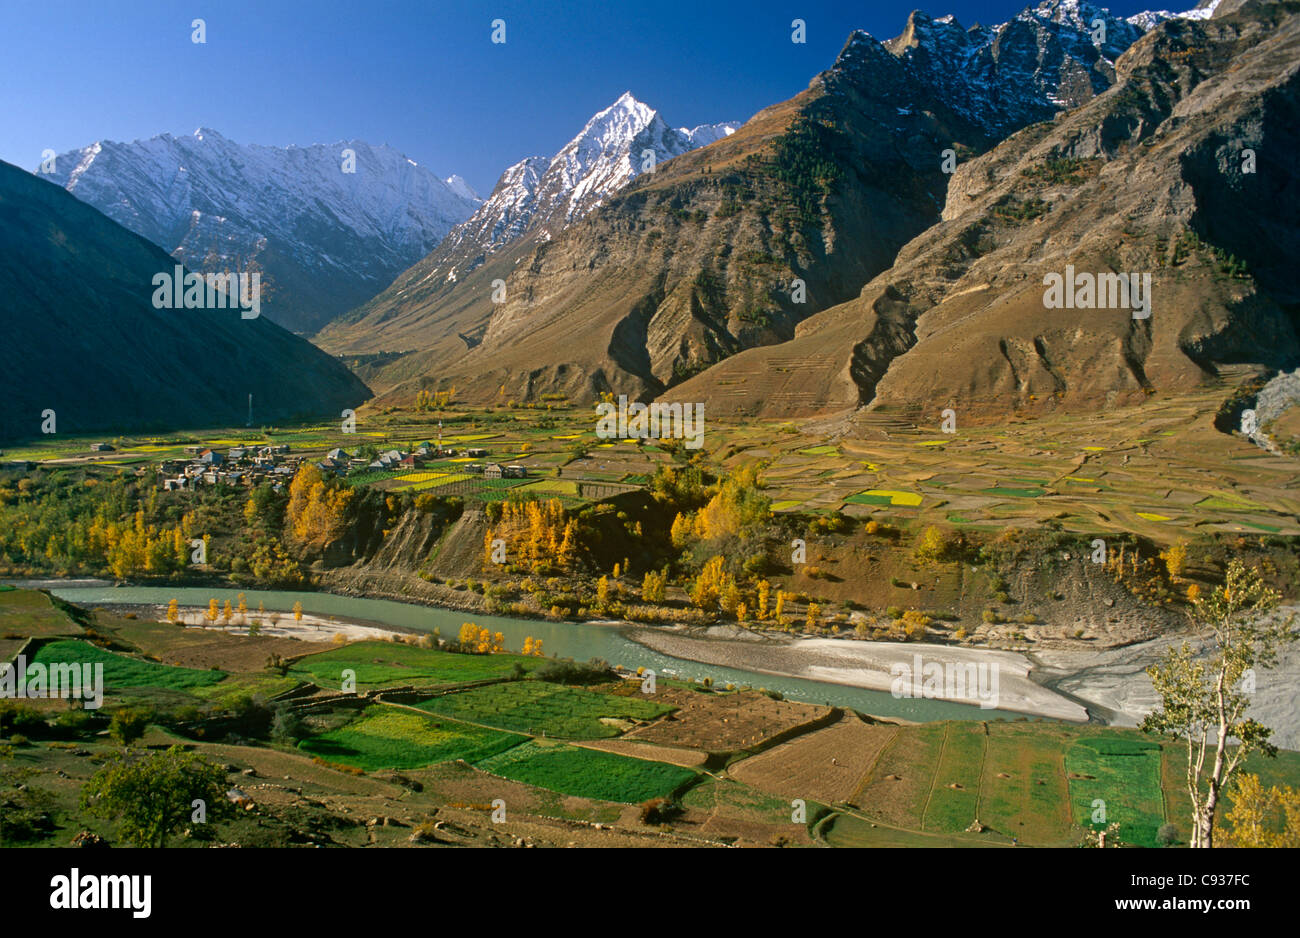 India, Himachal Pradesh, Lahaul, near Keylong. The Pattan Valley at Tandi marks the confluence of the Chandra and Bhaga Rivers. Stock Photo